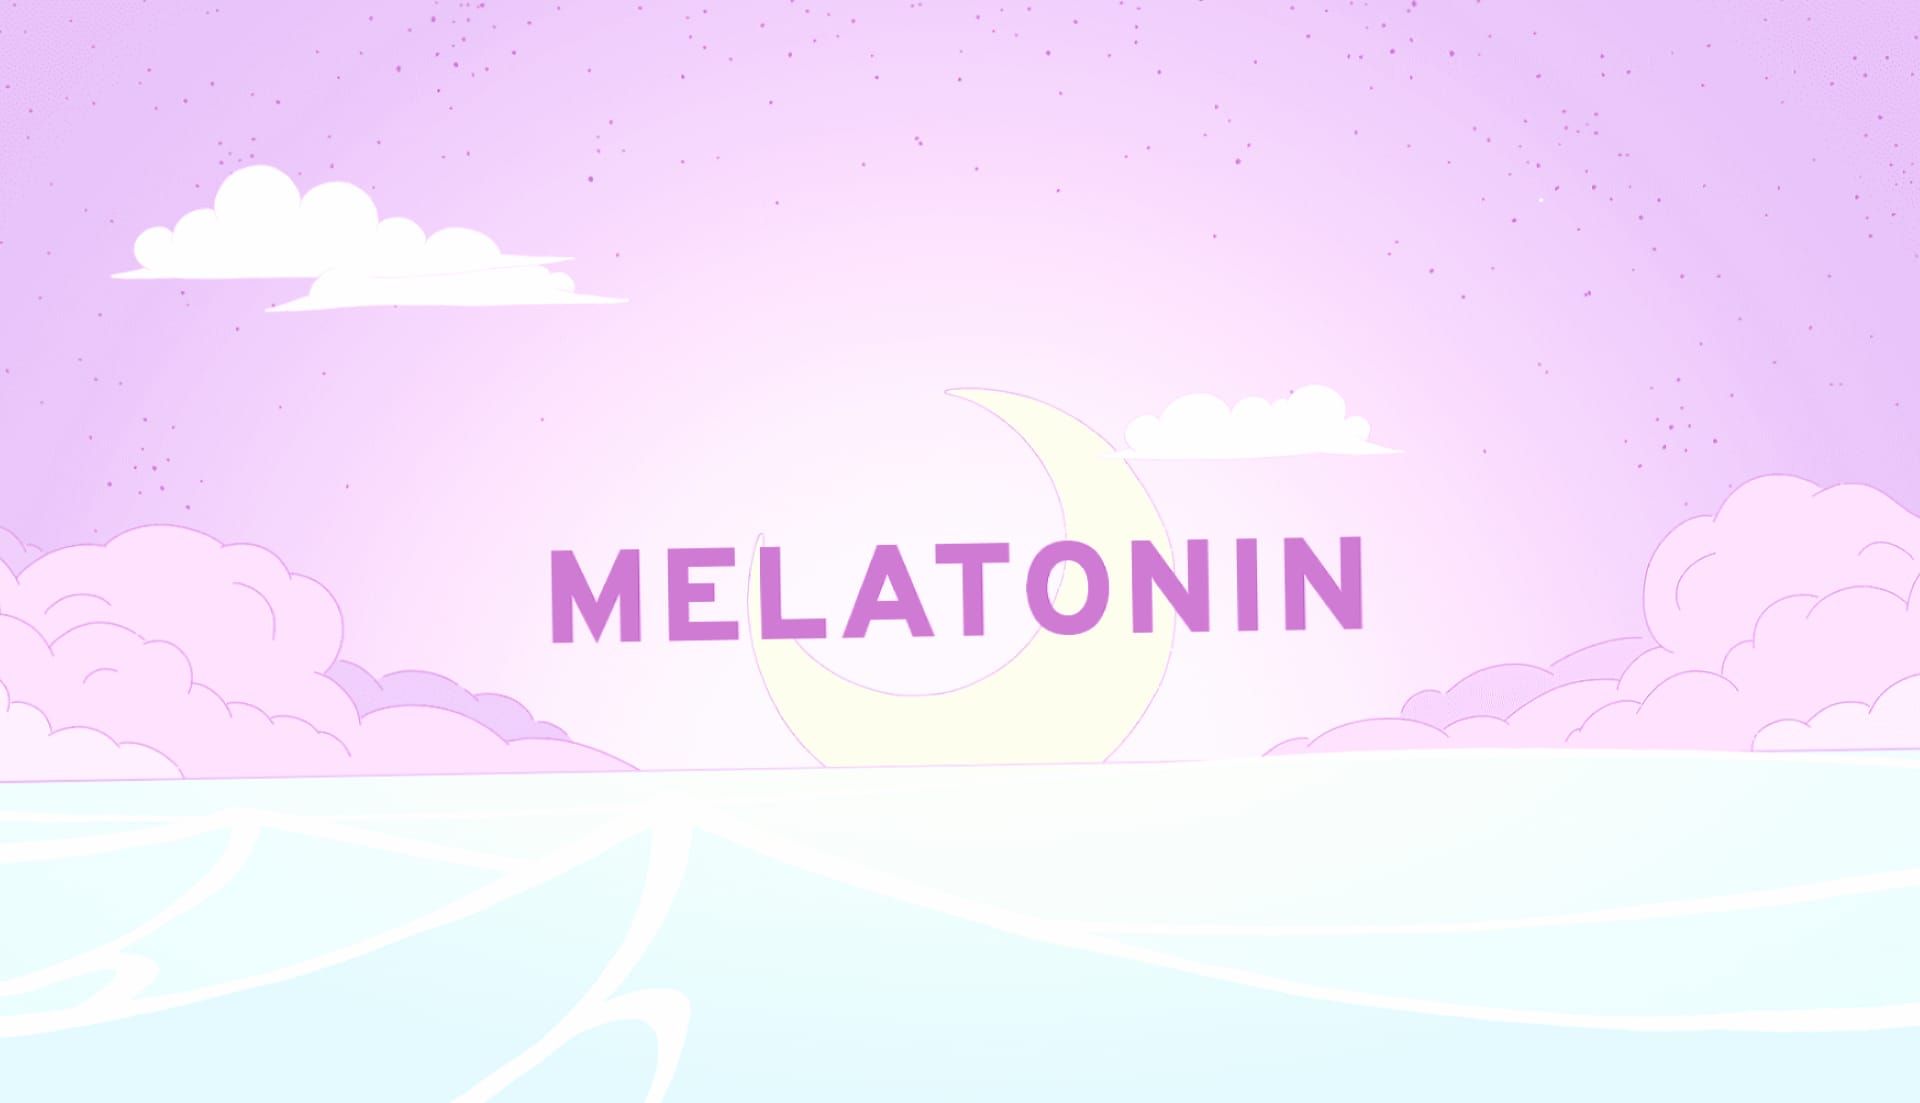 Melatonin at 1024 x 1024 iPad size wallpapers HD quality